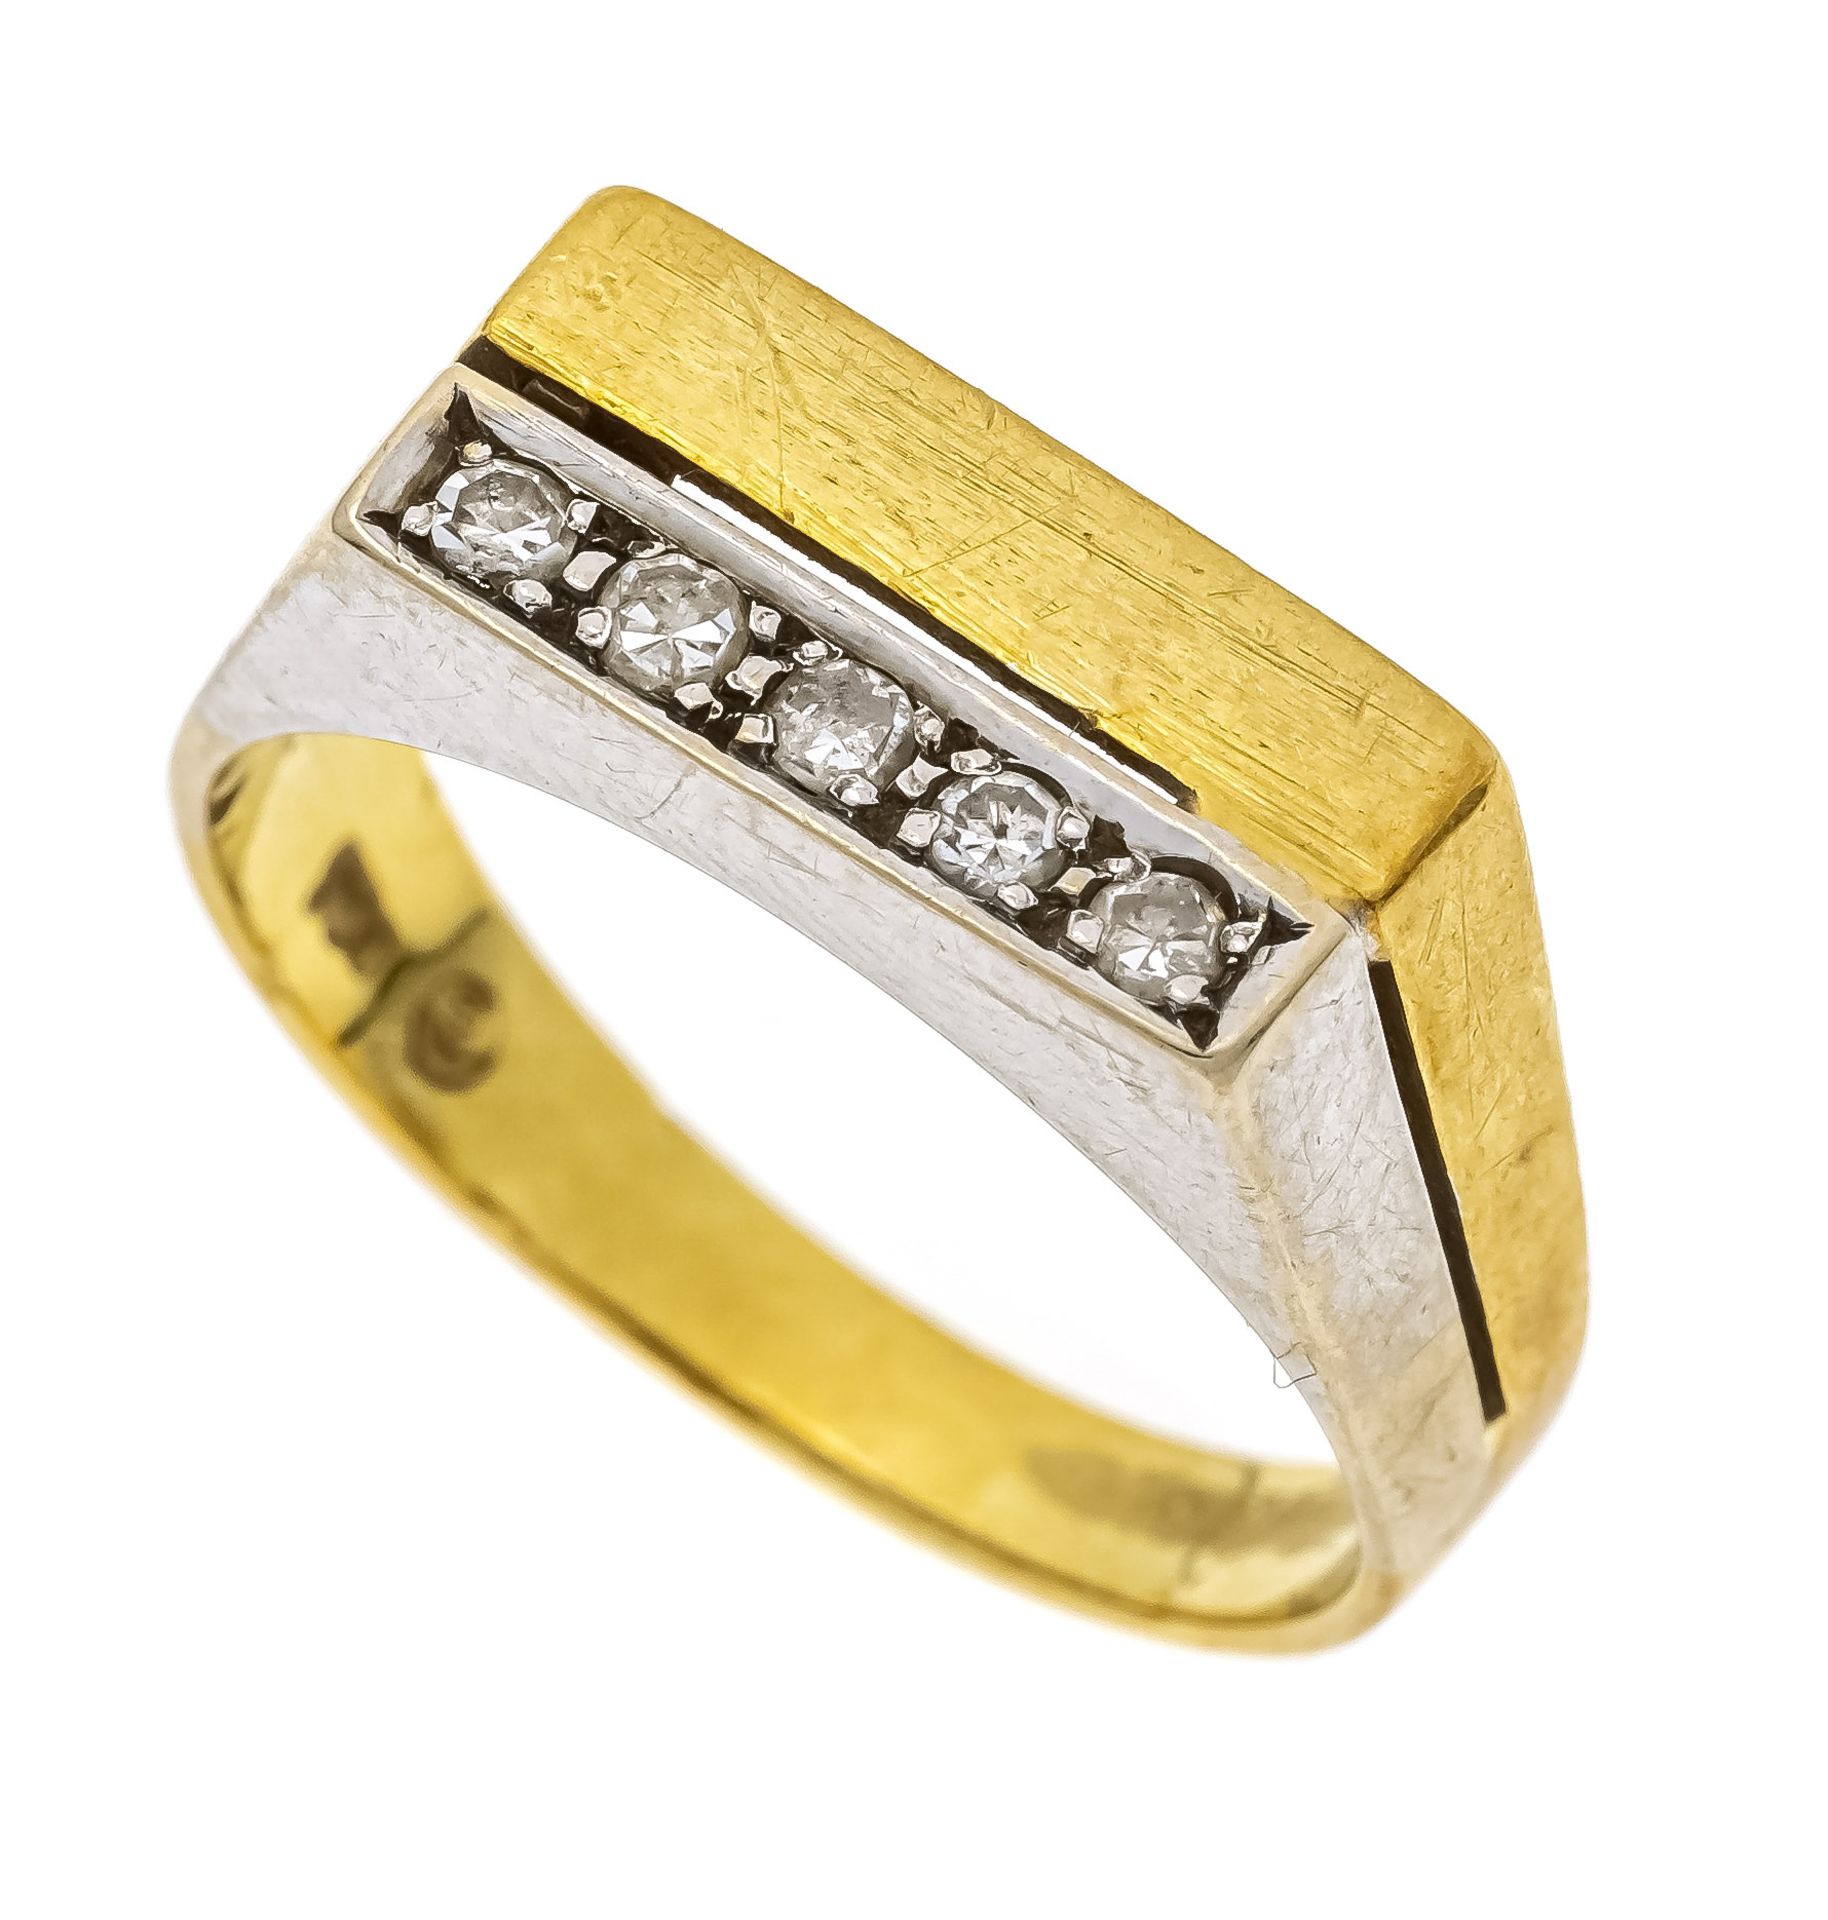 Diamond rivière ring GG/WG 750/000 with 5 octagonal diamonds, total 0.12 ct (hallmarked) W/SI, RG